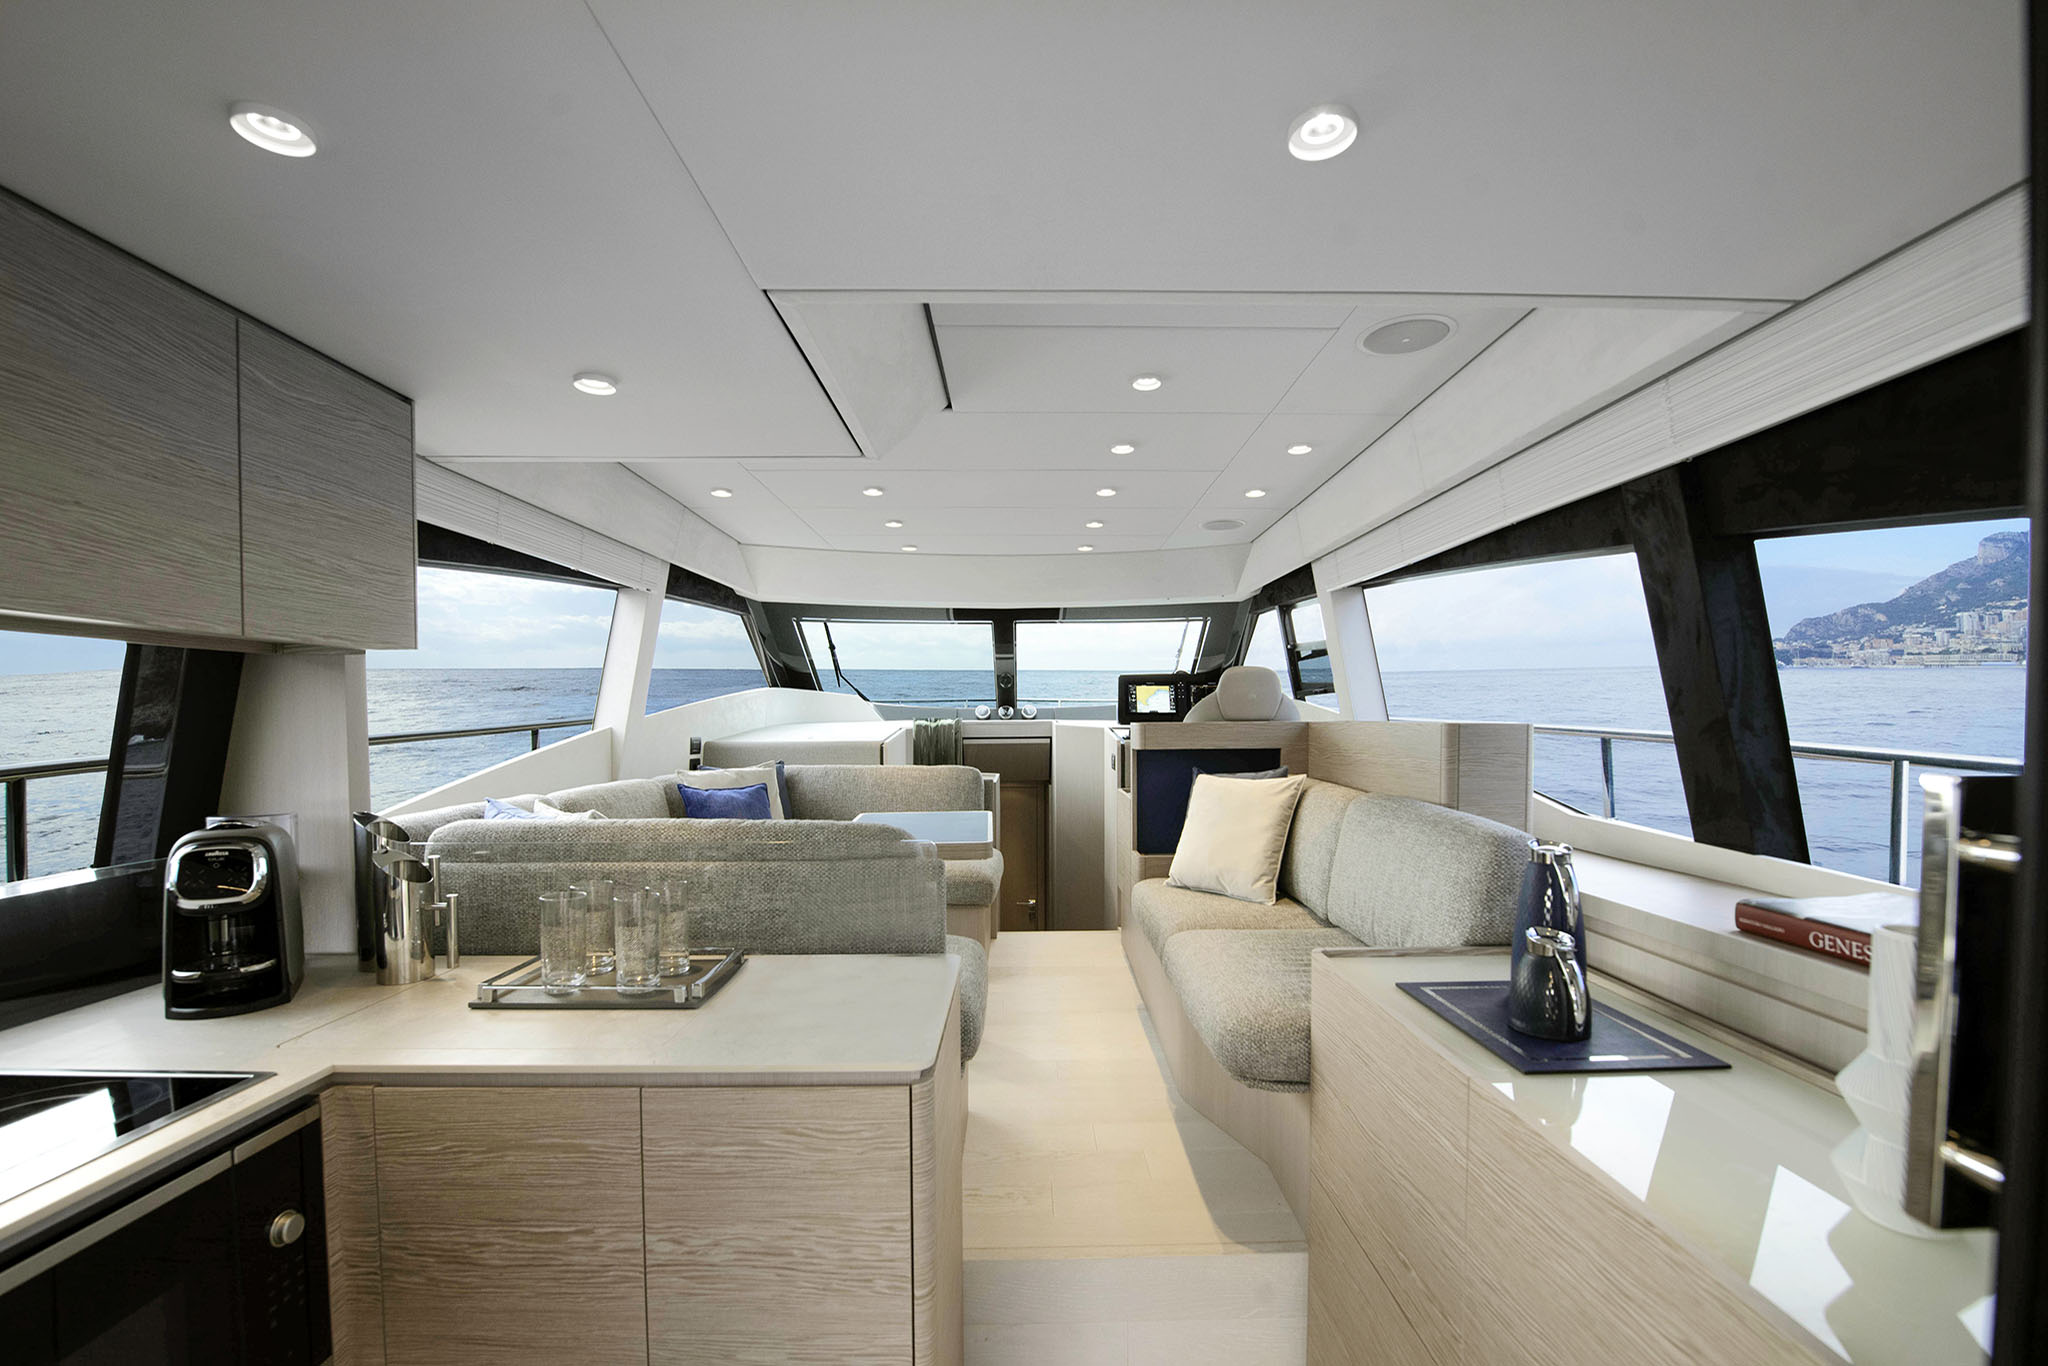 Yacht Brands Ferretti Yacht 500 main deck salon galley contemporary